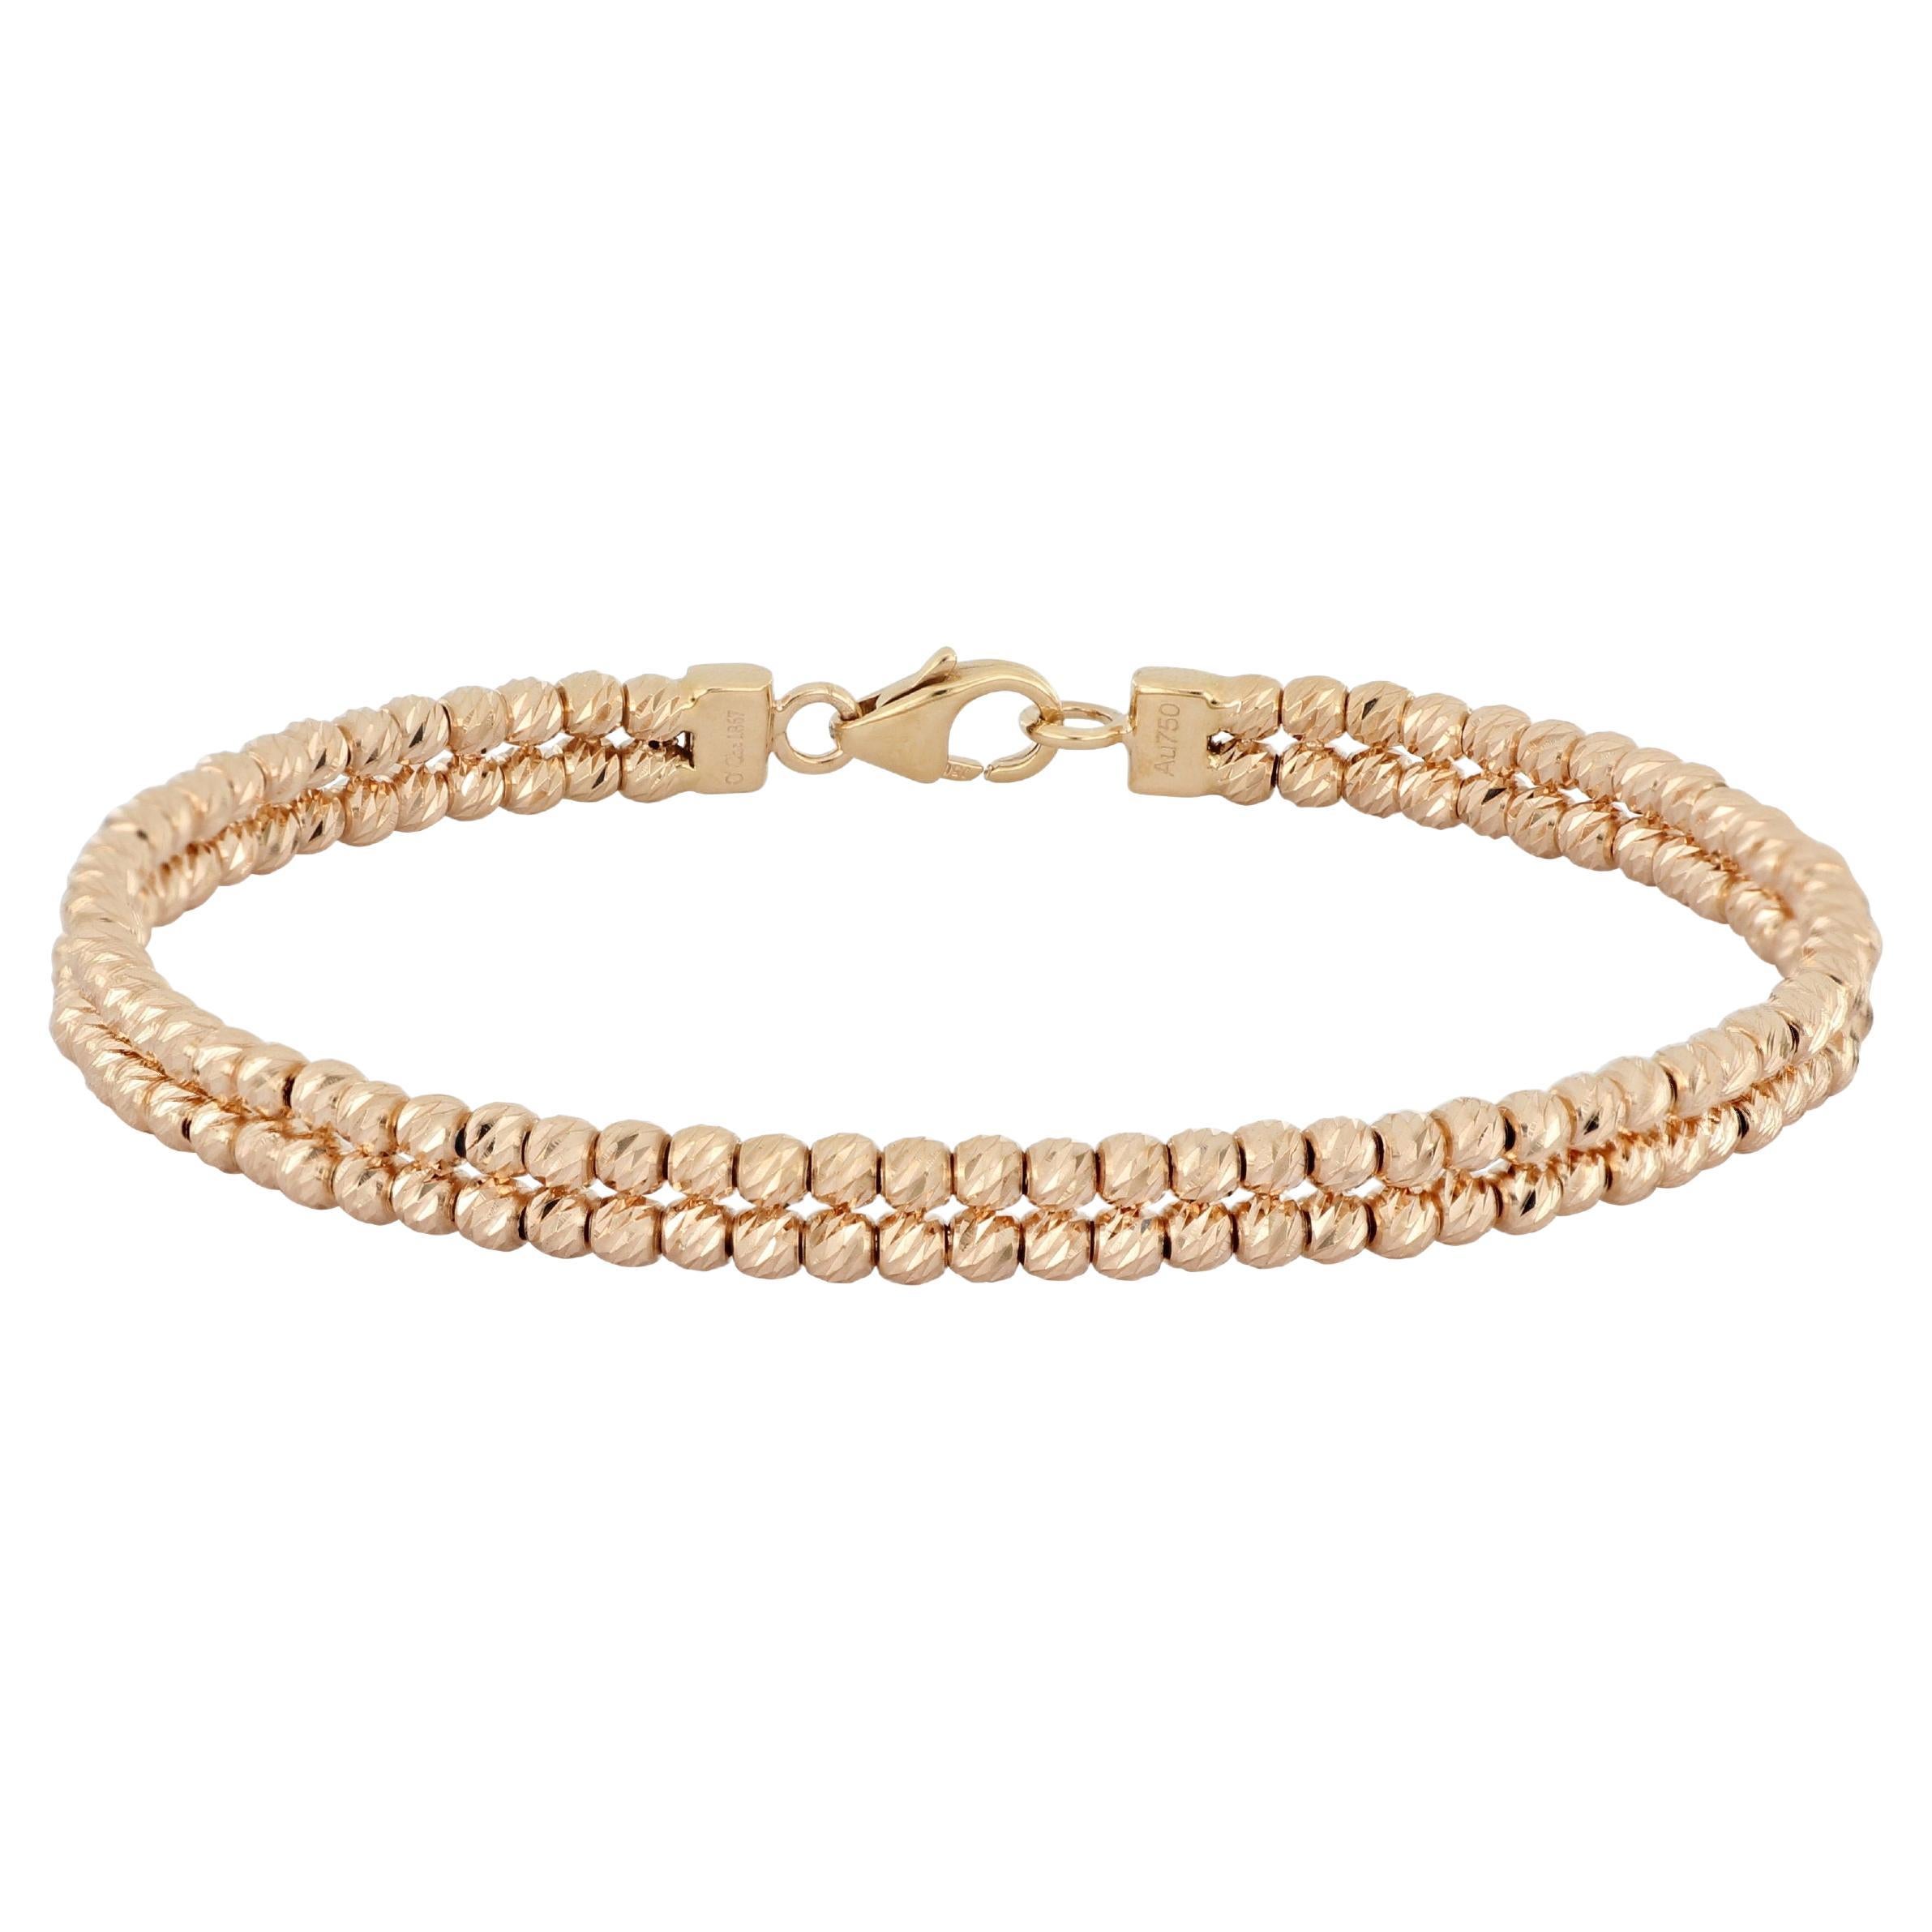 18 Karat Rose Gold Bangle with Sparkling Diamond-cut Beads